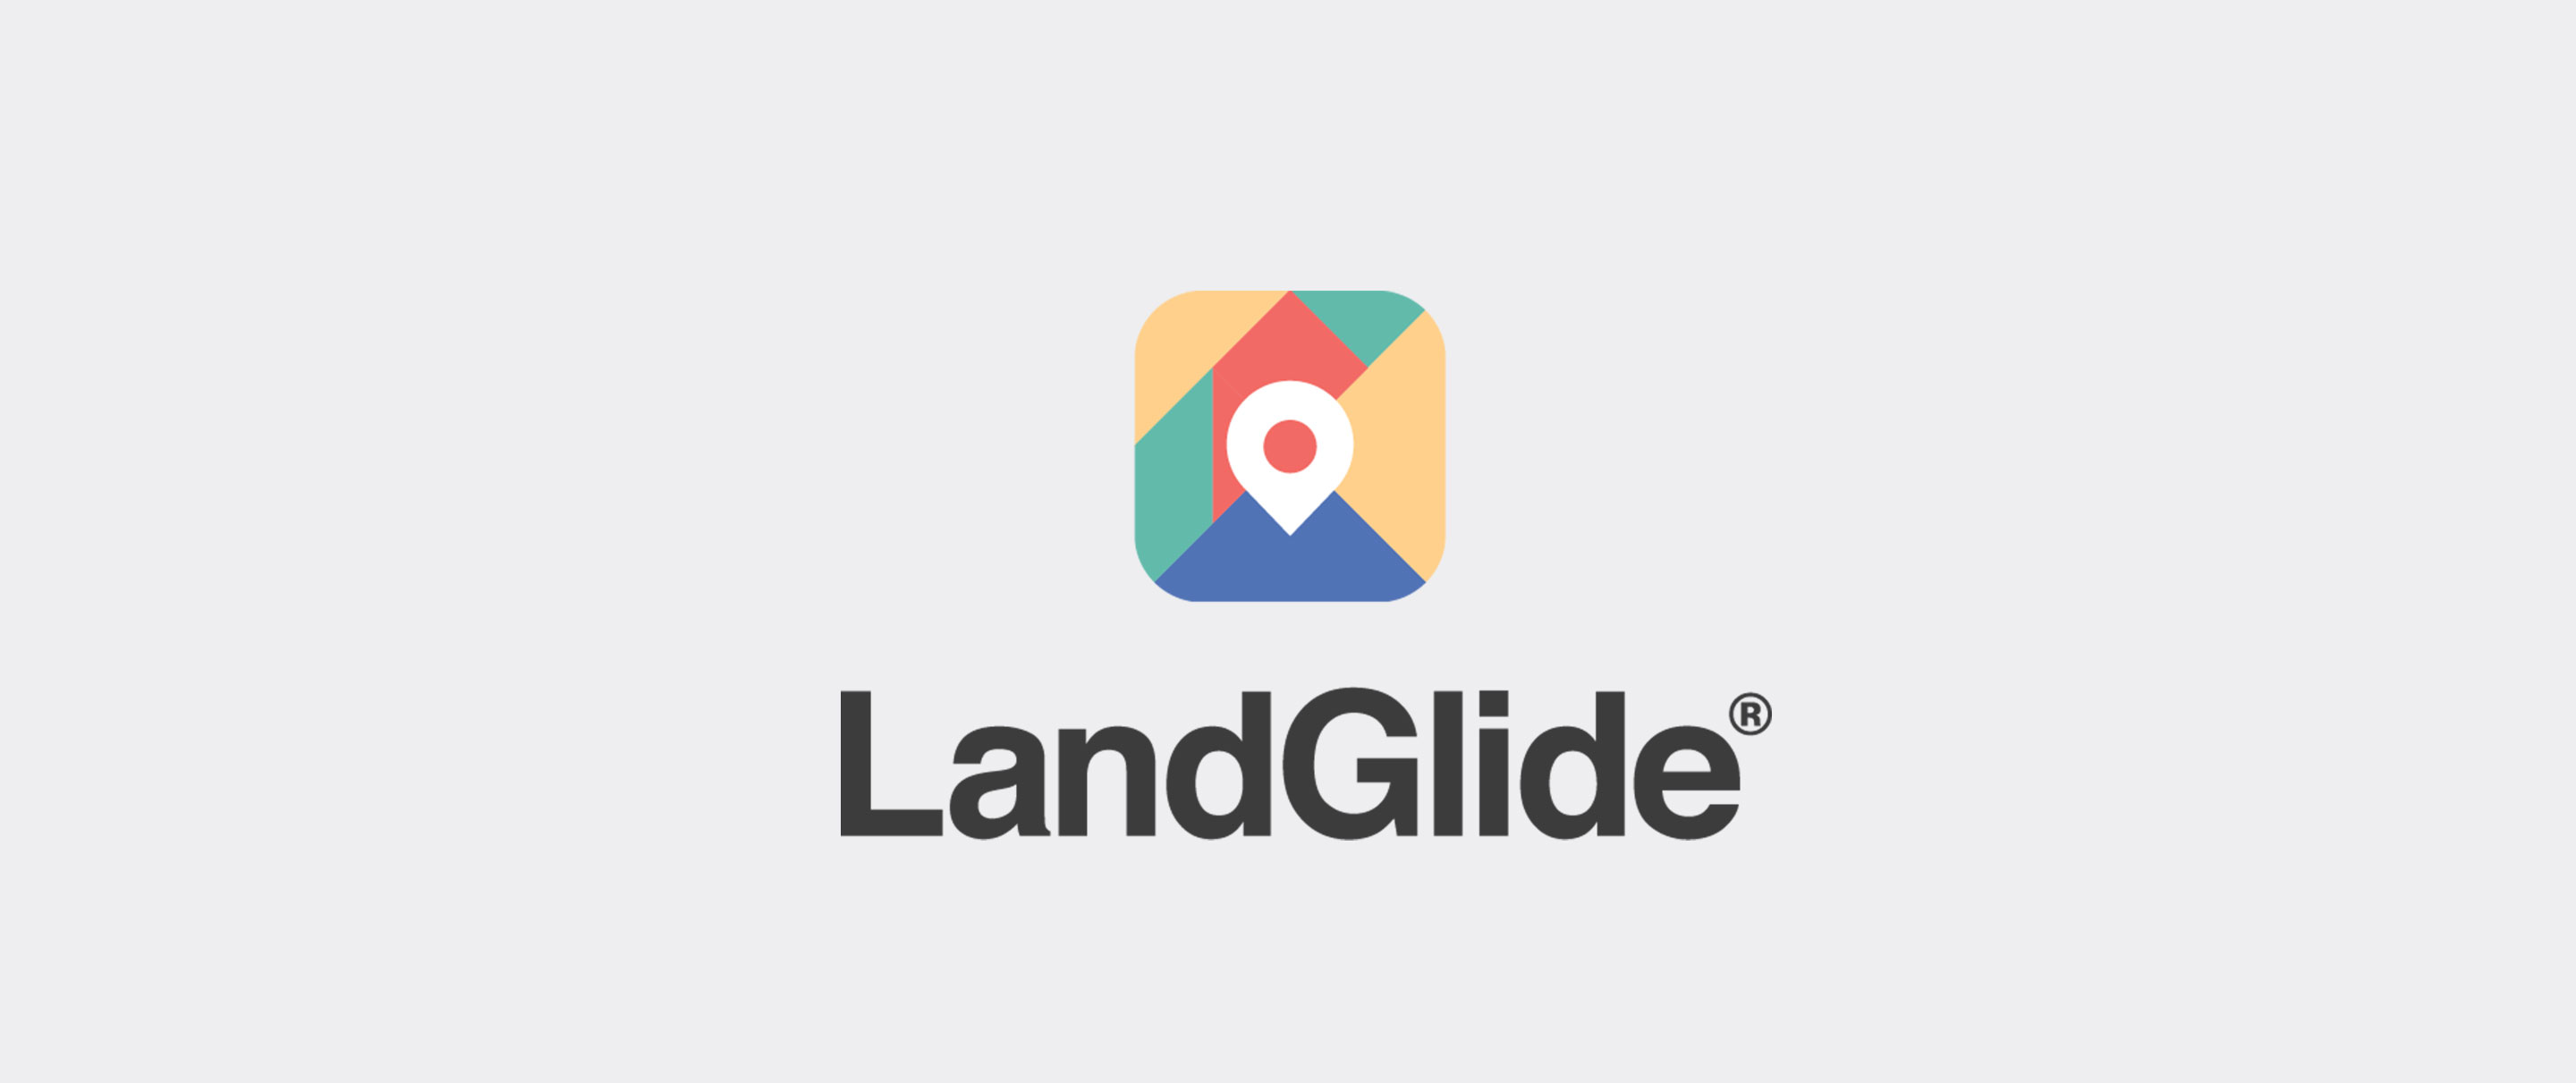 LandGlide Logo